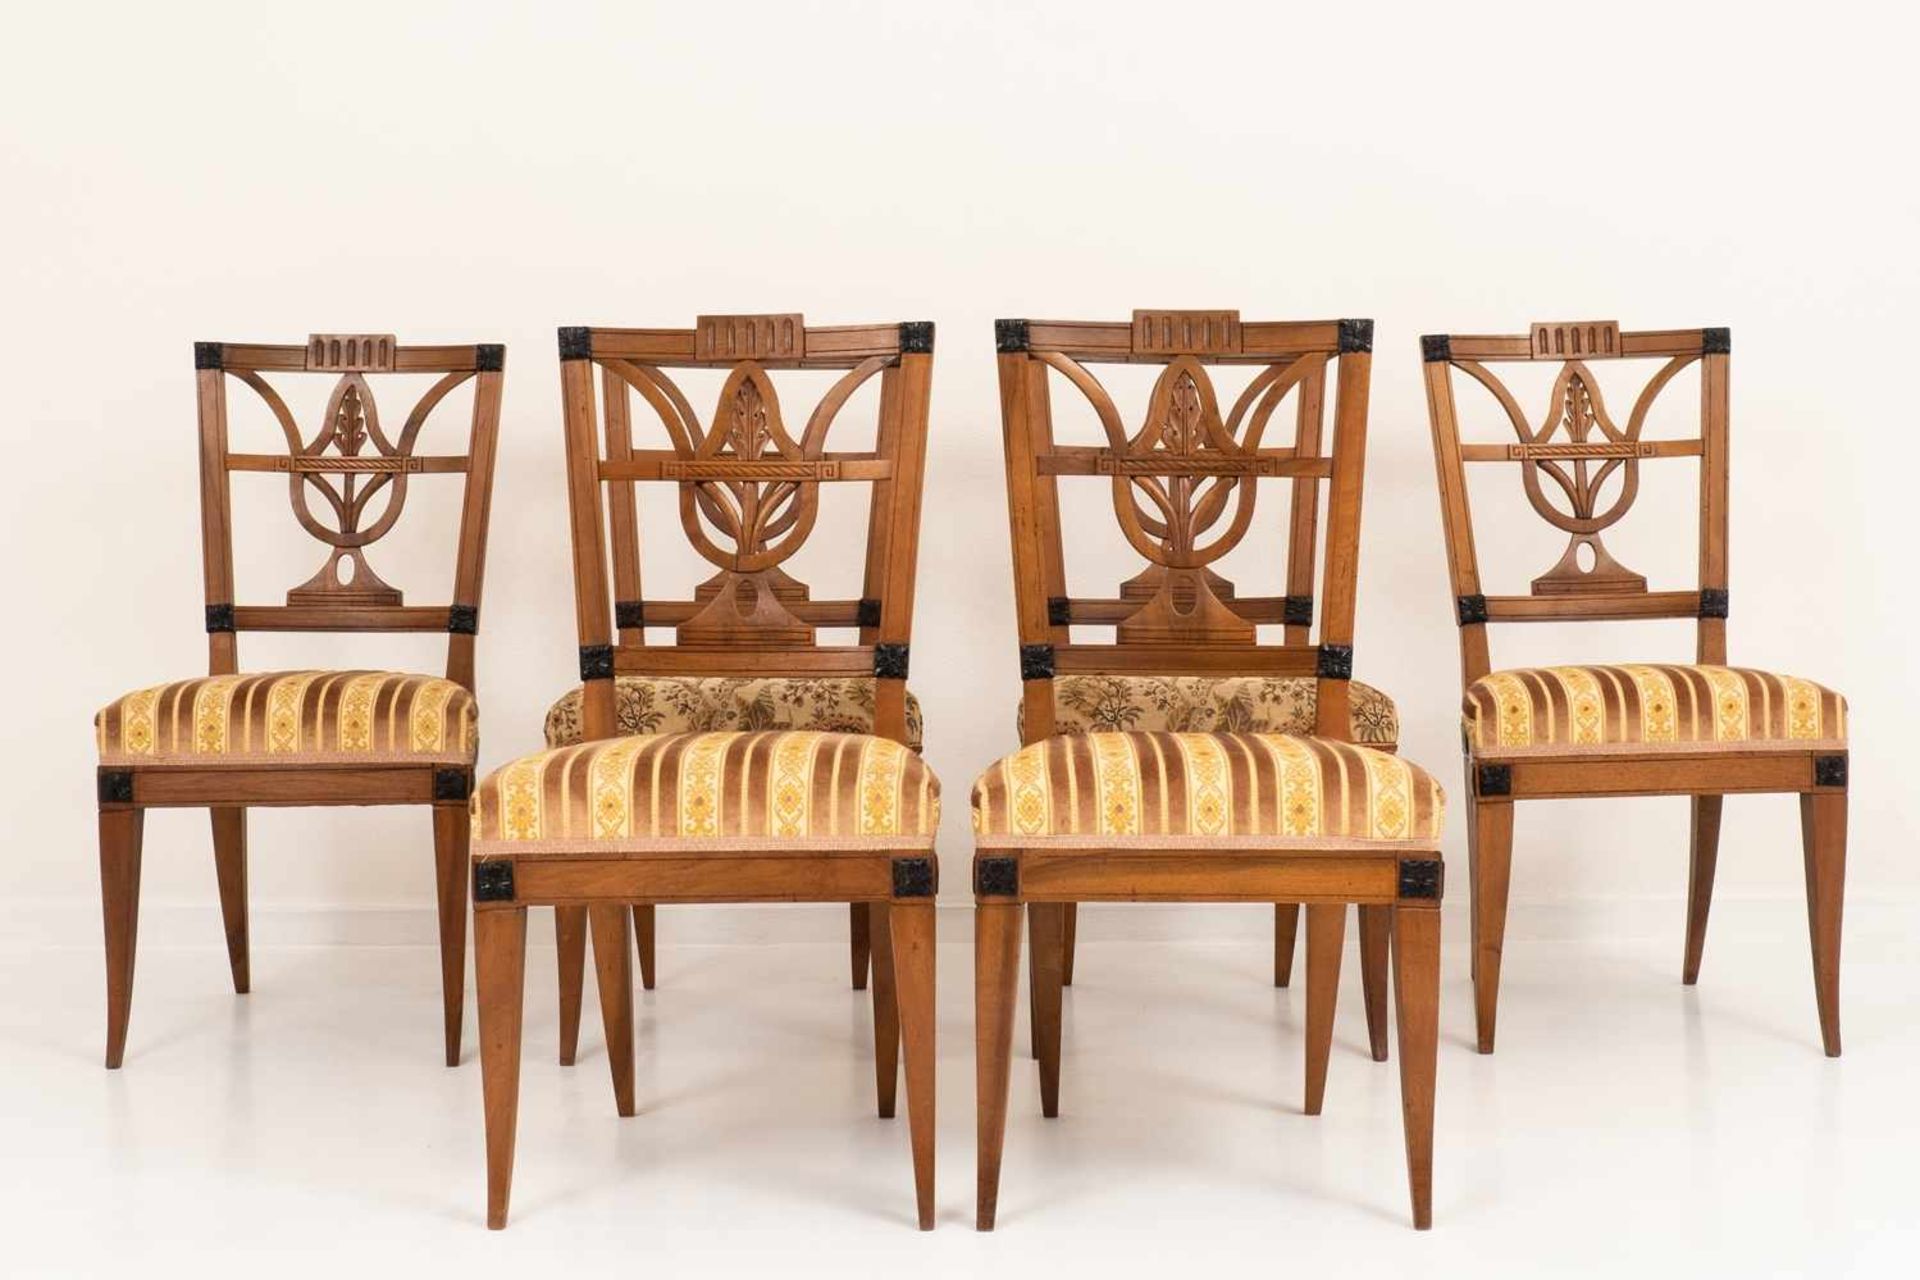 Six Louis-seize chairs